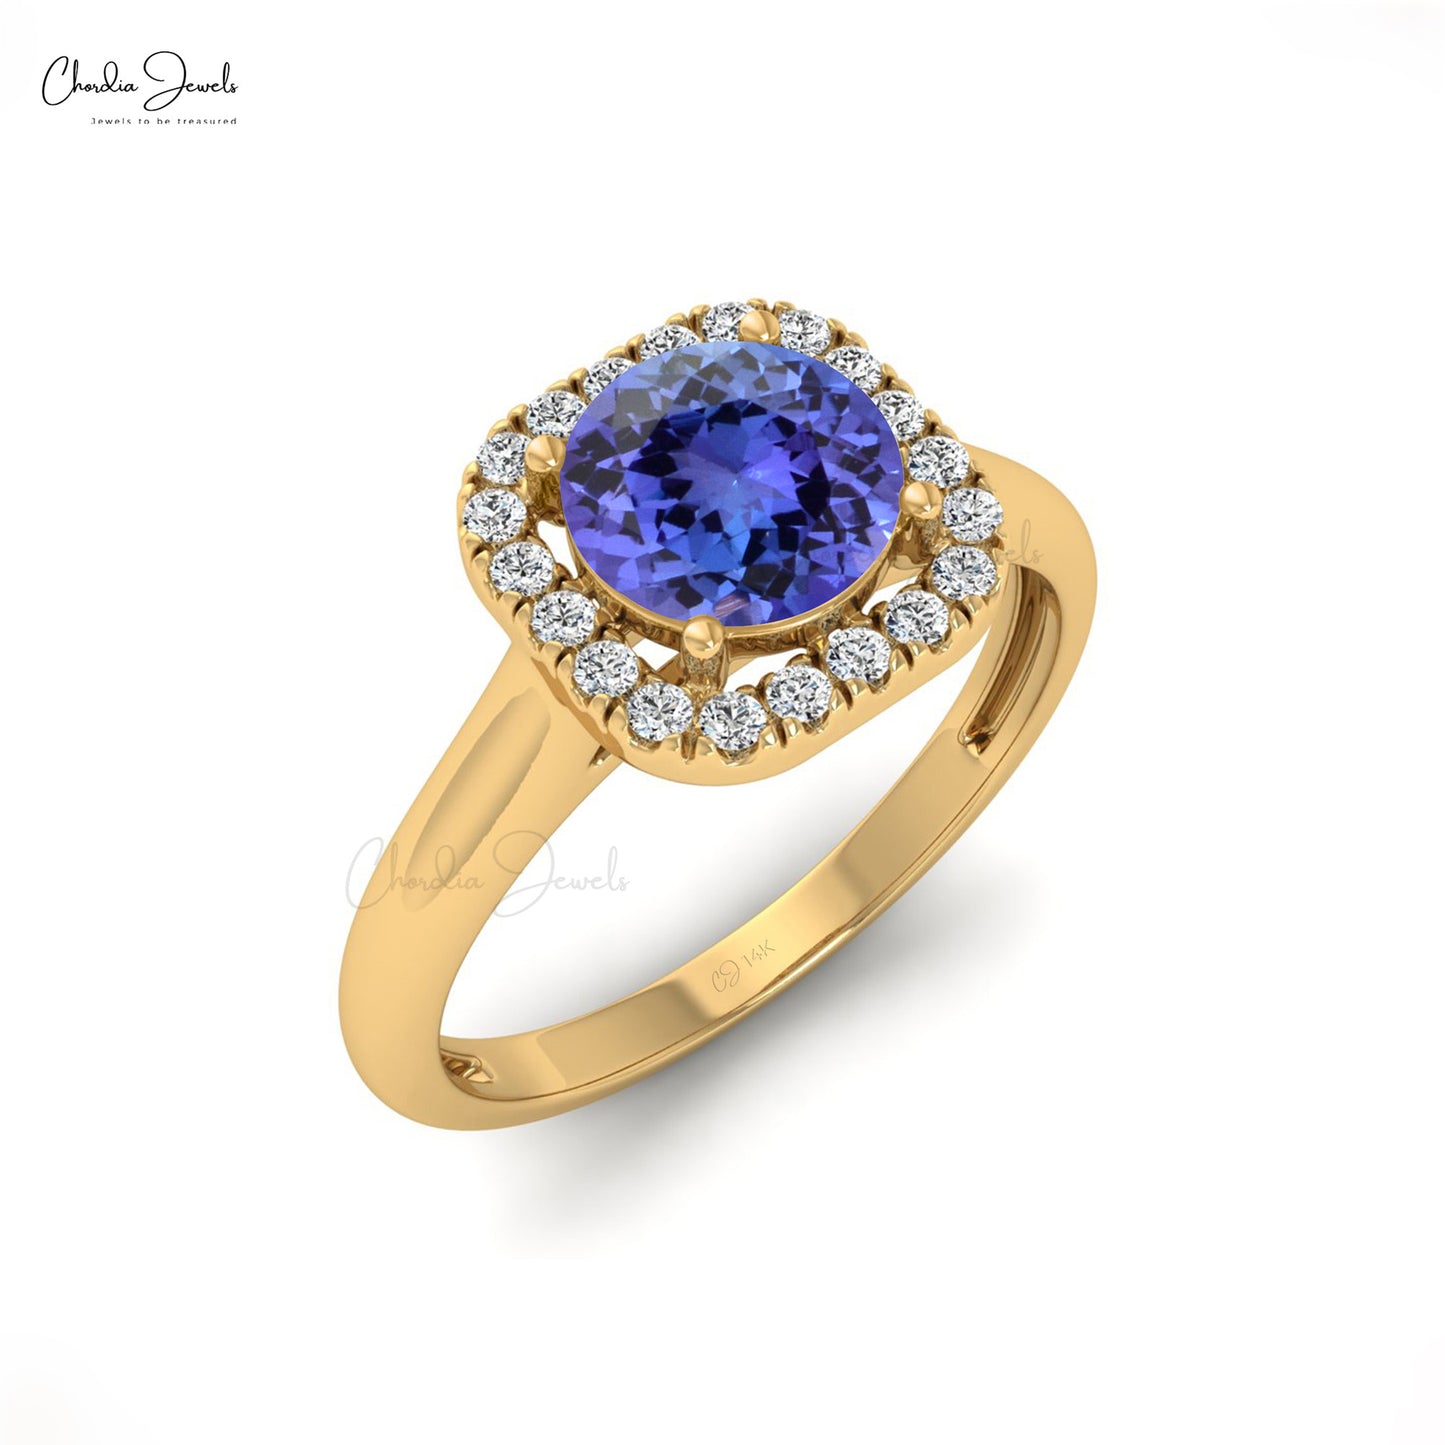 Buy Best Quality Daily Use Balaji Ring Original Impon Jewellery